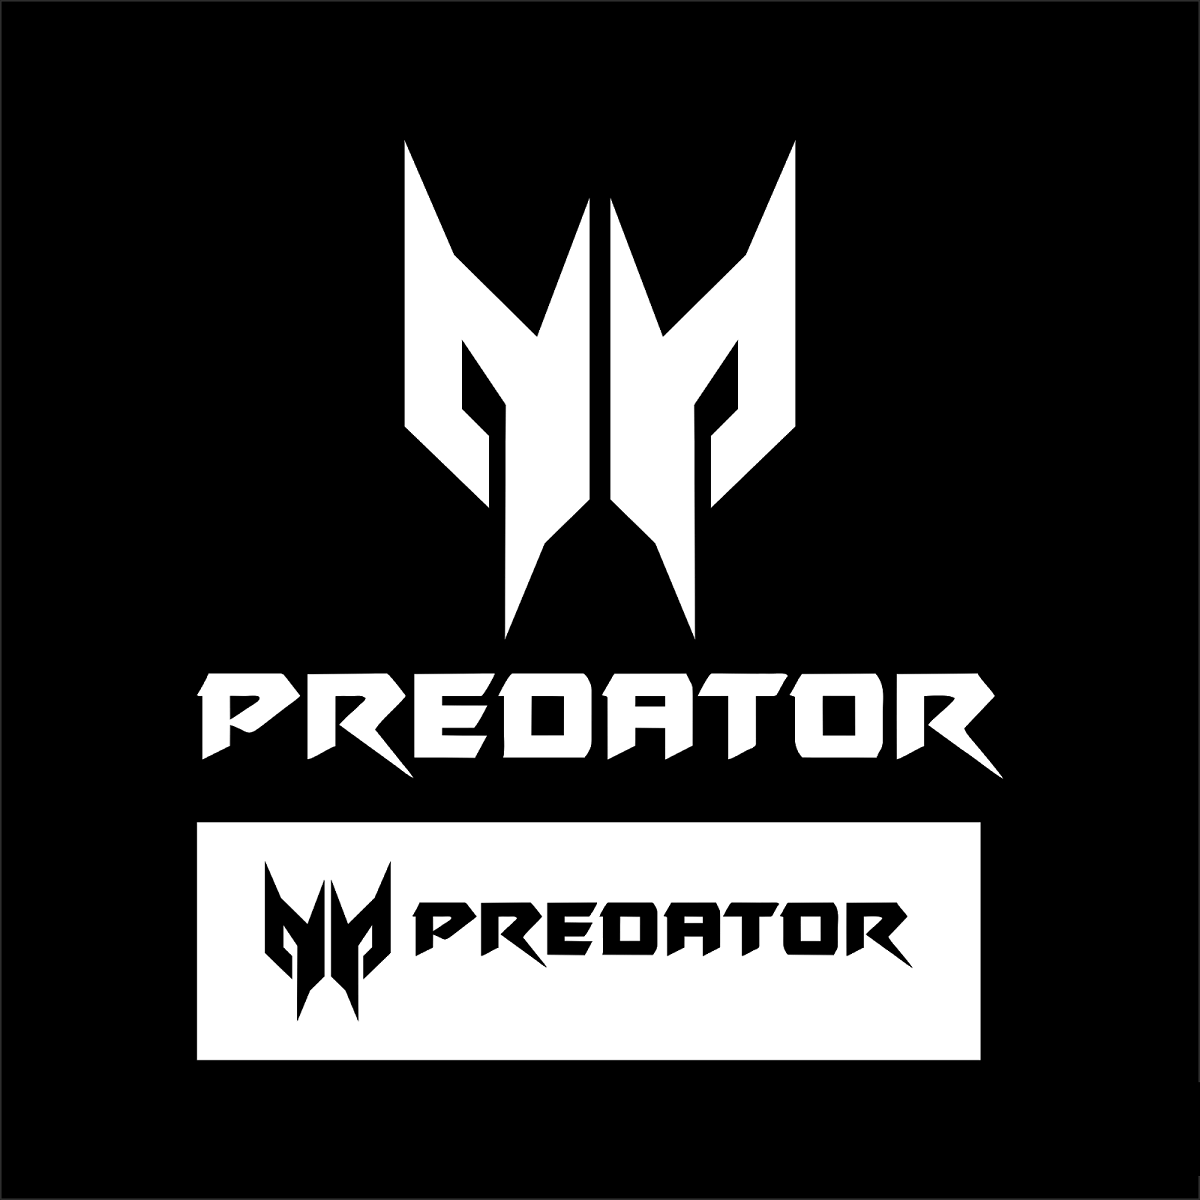 Best predator monitors